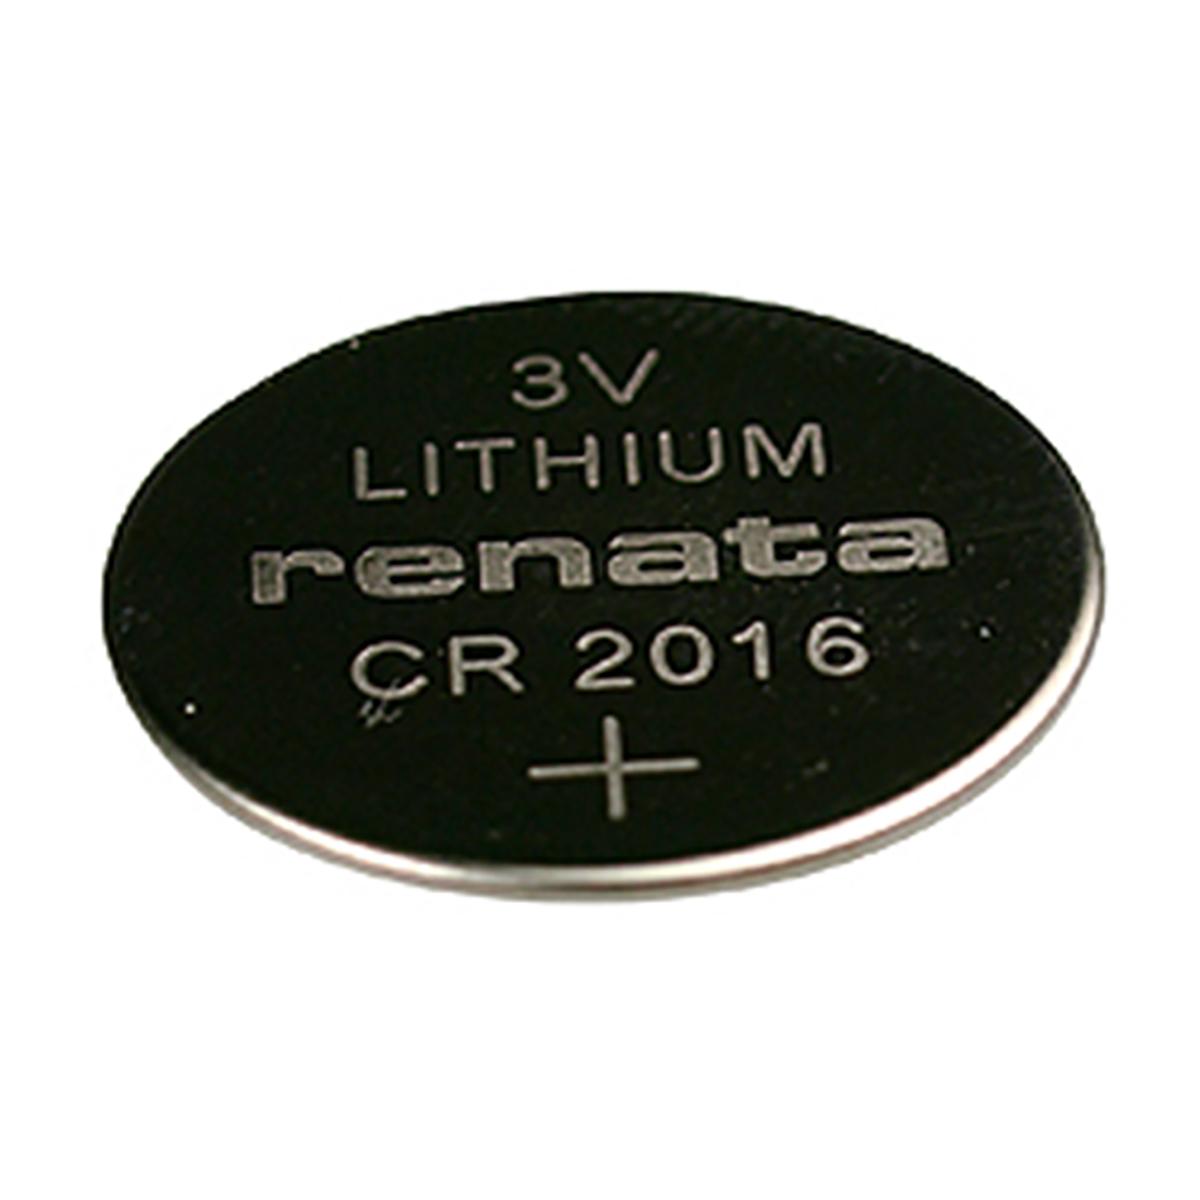 Renata CR2016 Battery 3v Lithium Coin Cell